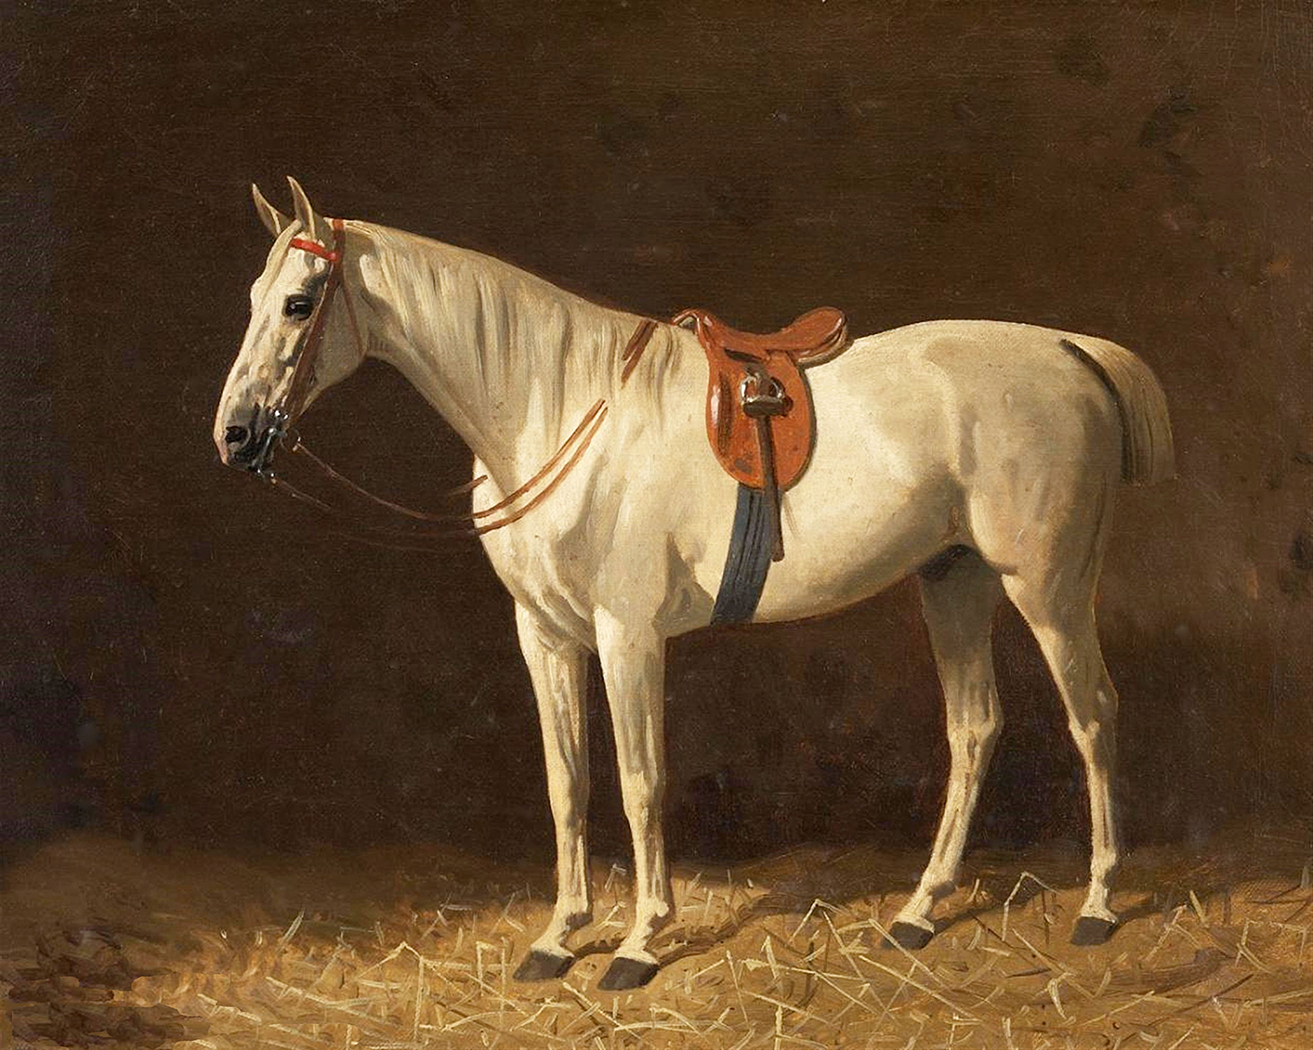 Equestrian/Fox Equestrian Saddled Grey Horse Oil Painting Print  ...